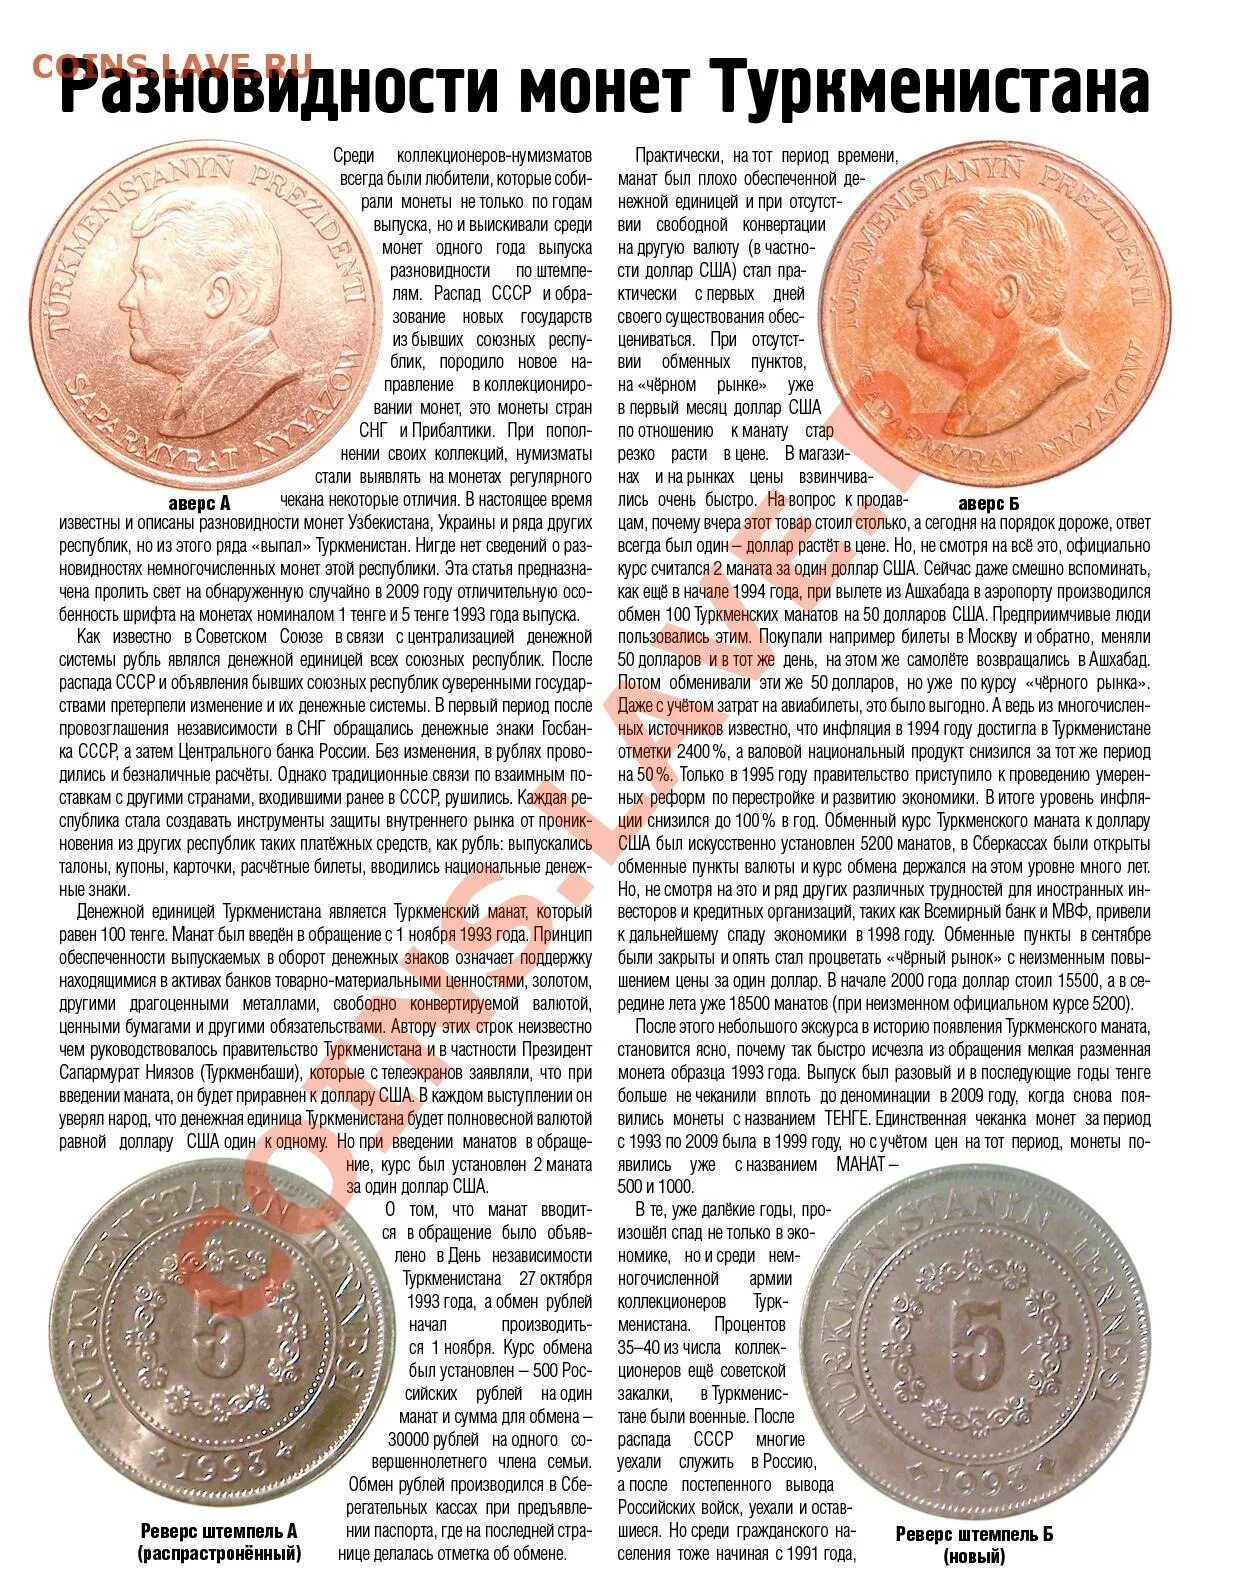 Манат денежная единица курс. Курс доллара на черном рынке Туркменистана. Разновидности монет Туркменистана. Денежная система Туркменистана. Валюта Туркменистана к доллару.